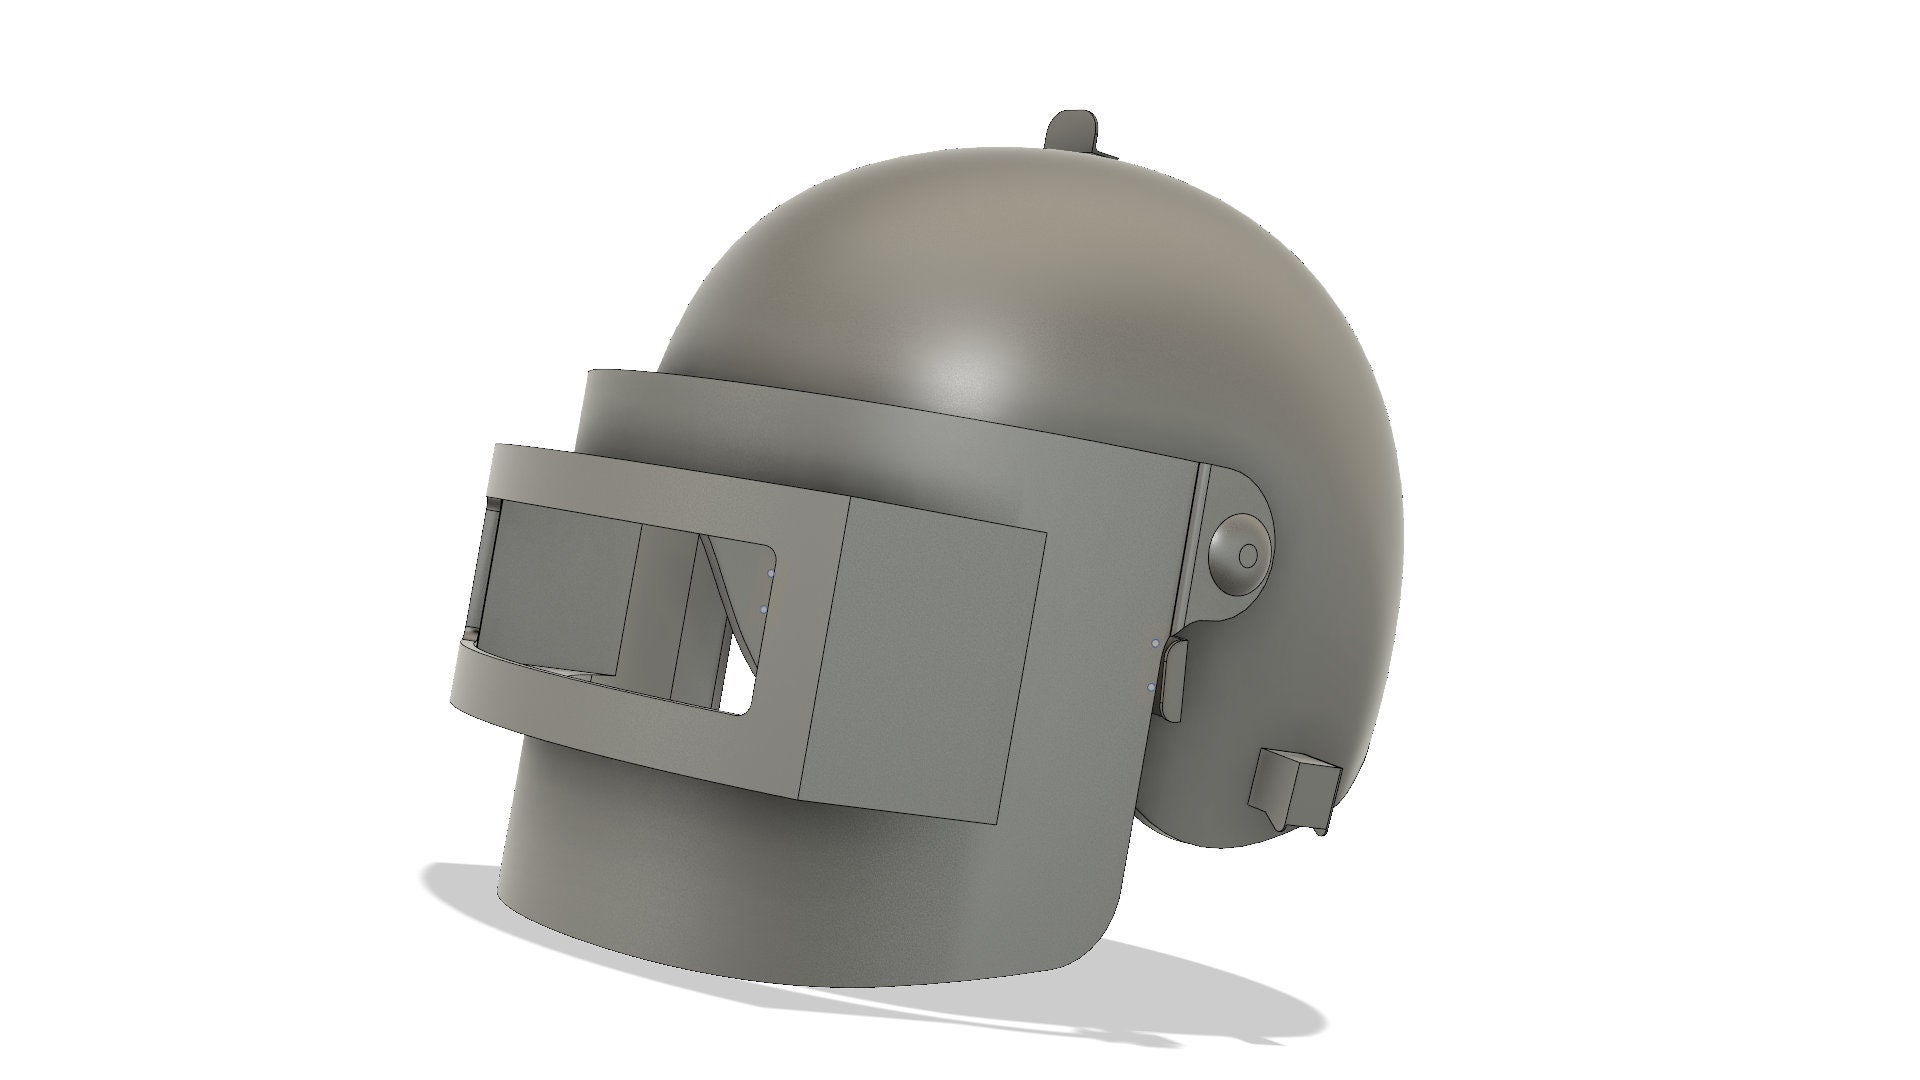 Pubg Level 3 Helmet 